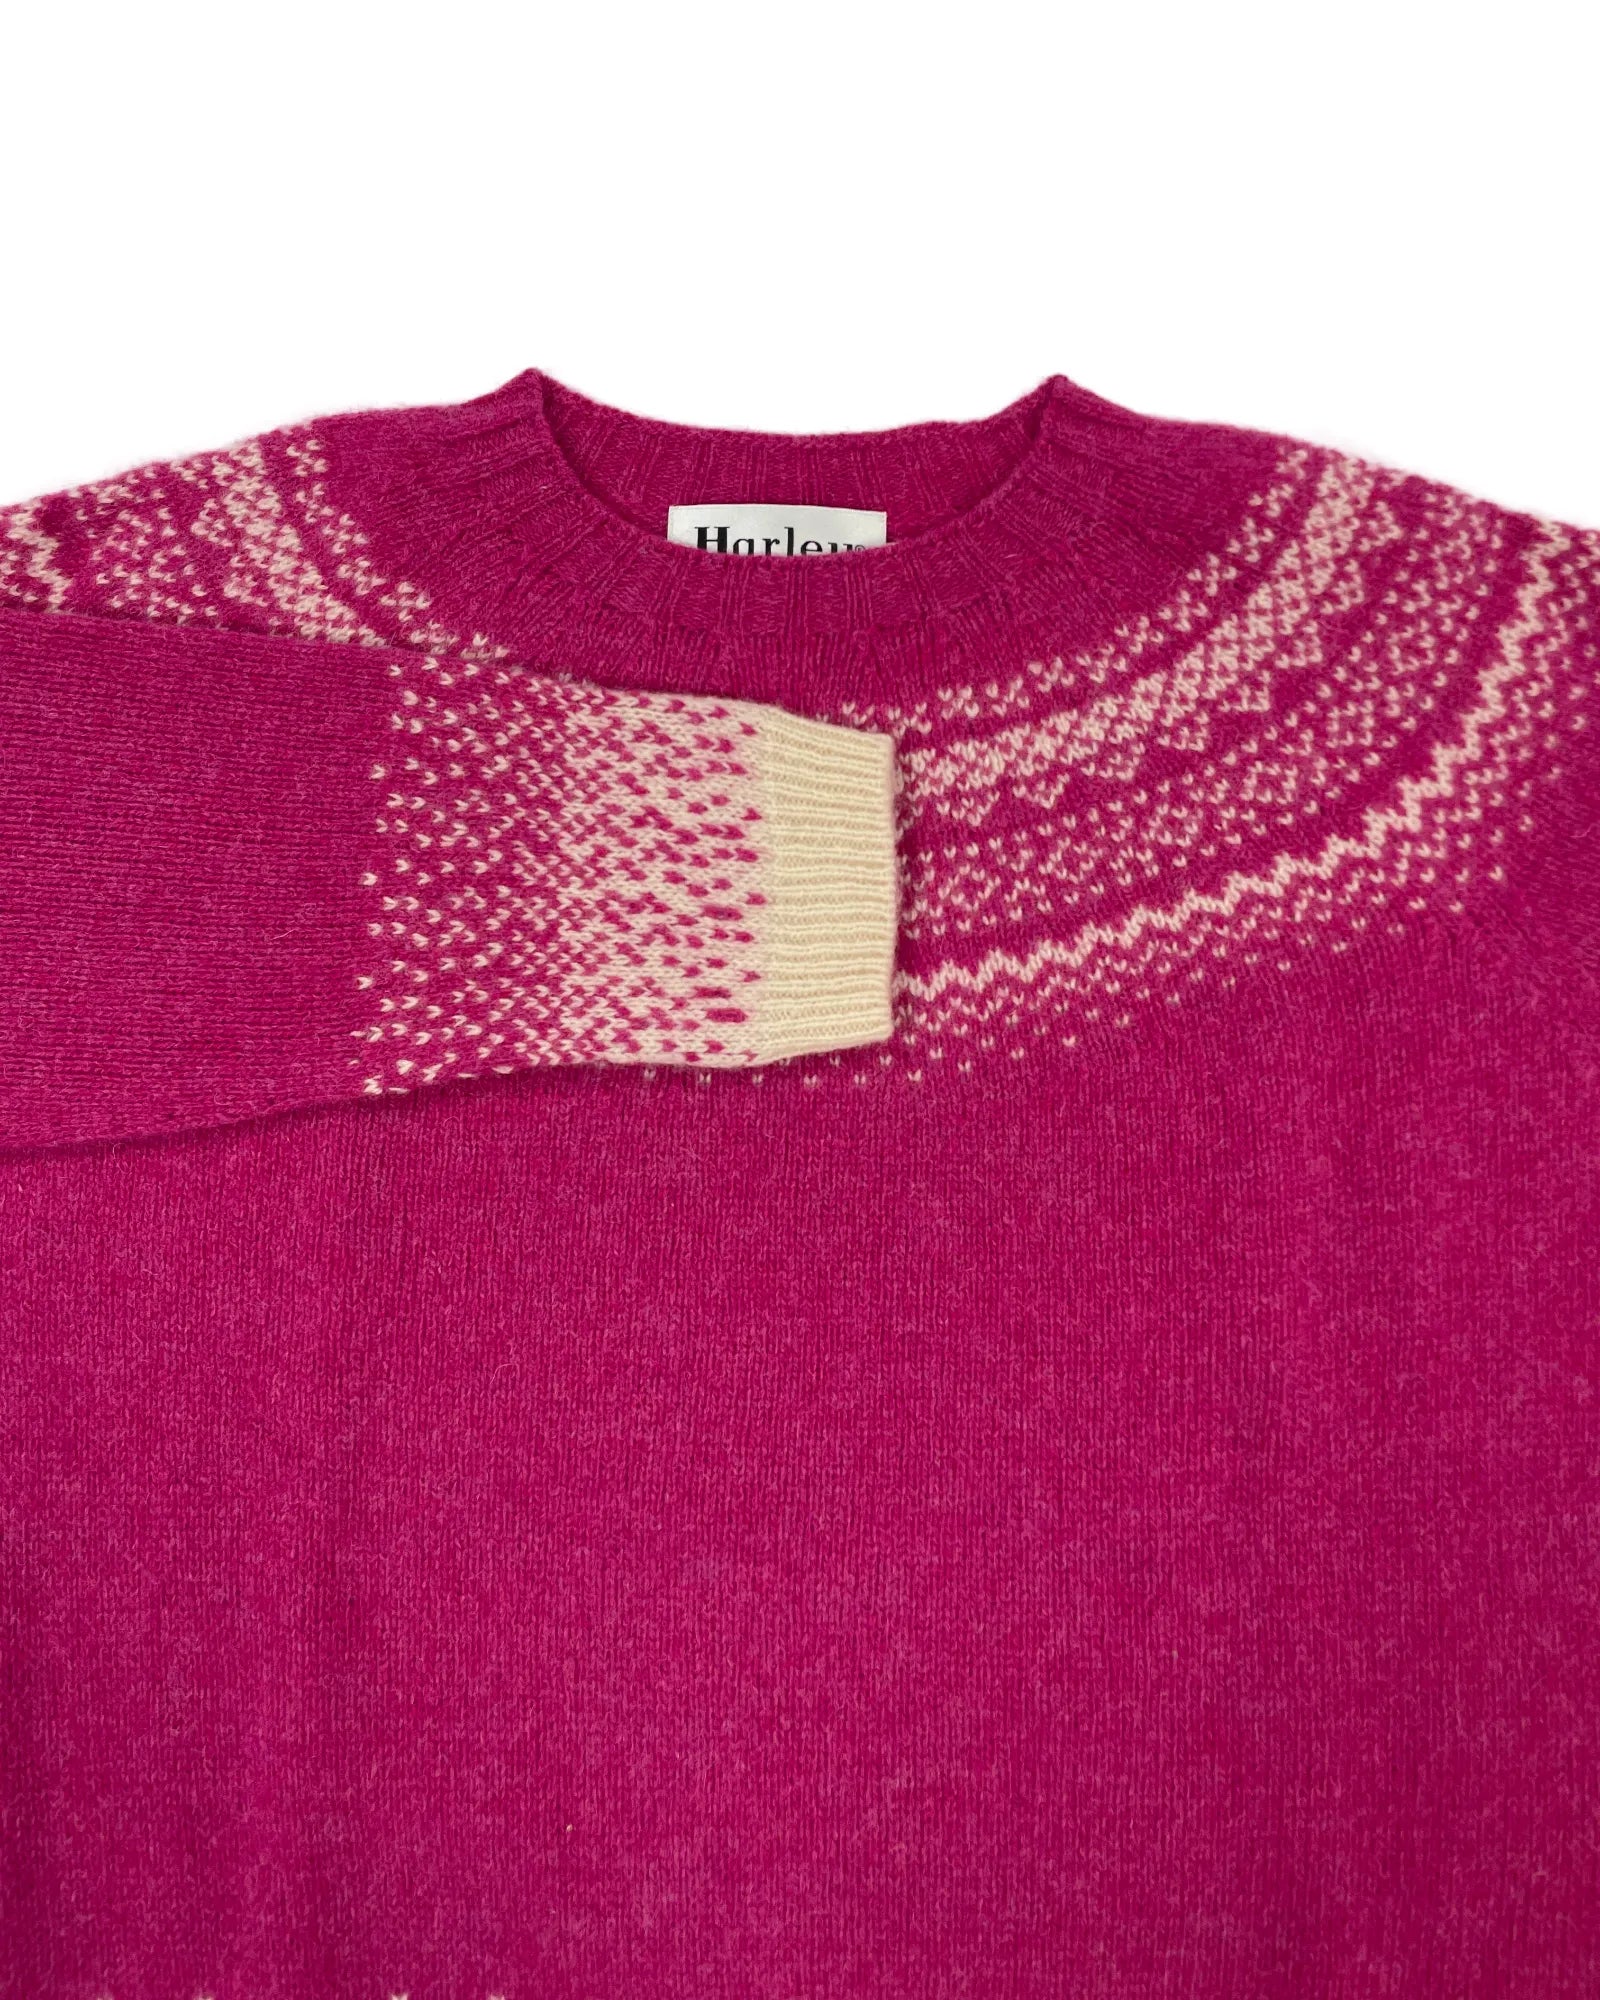 Women's Fair Isle Knitted Jumper (L5113/7) - Cream/Carnation